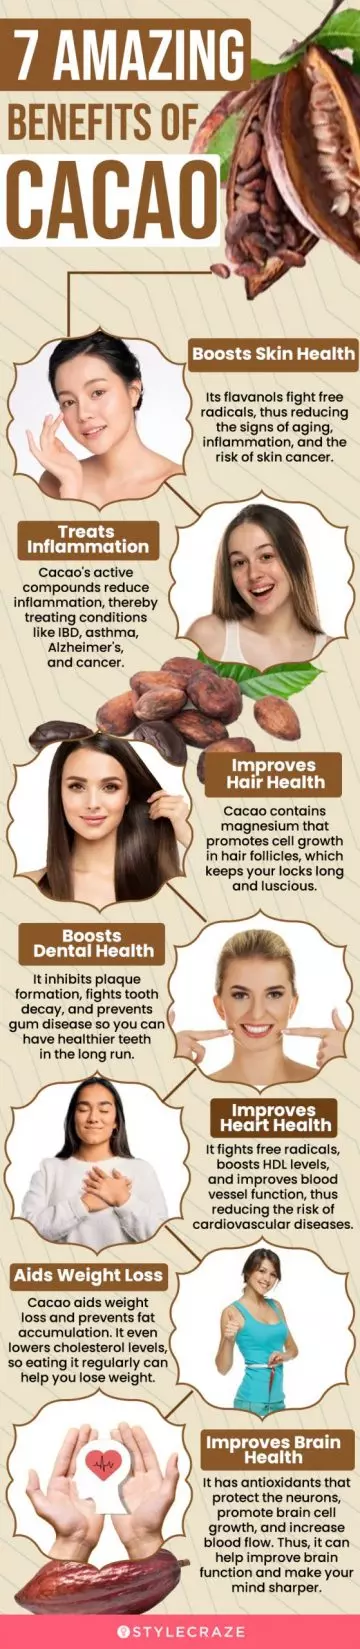 7 amazing benefits of cacao (infographic)